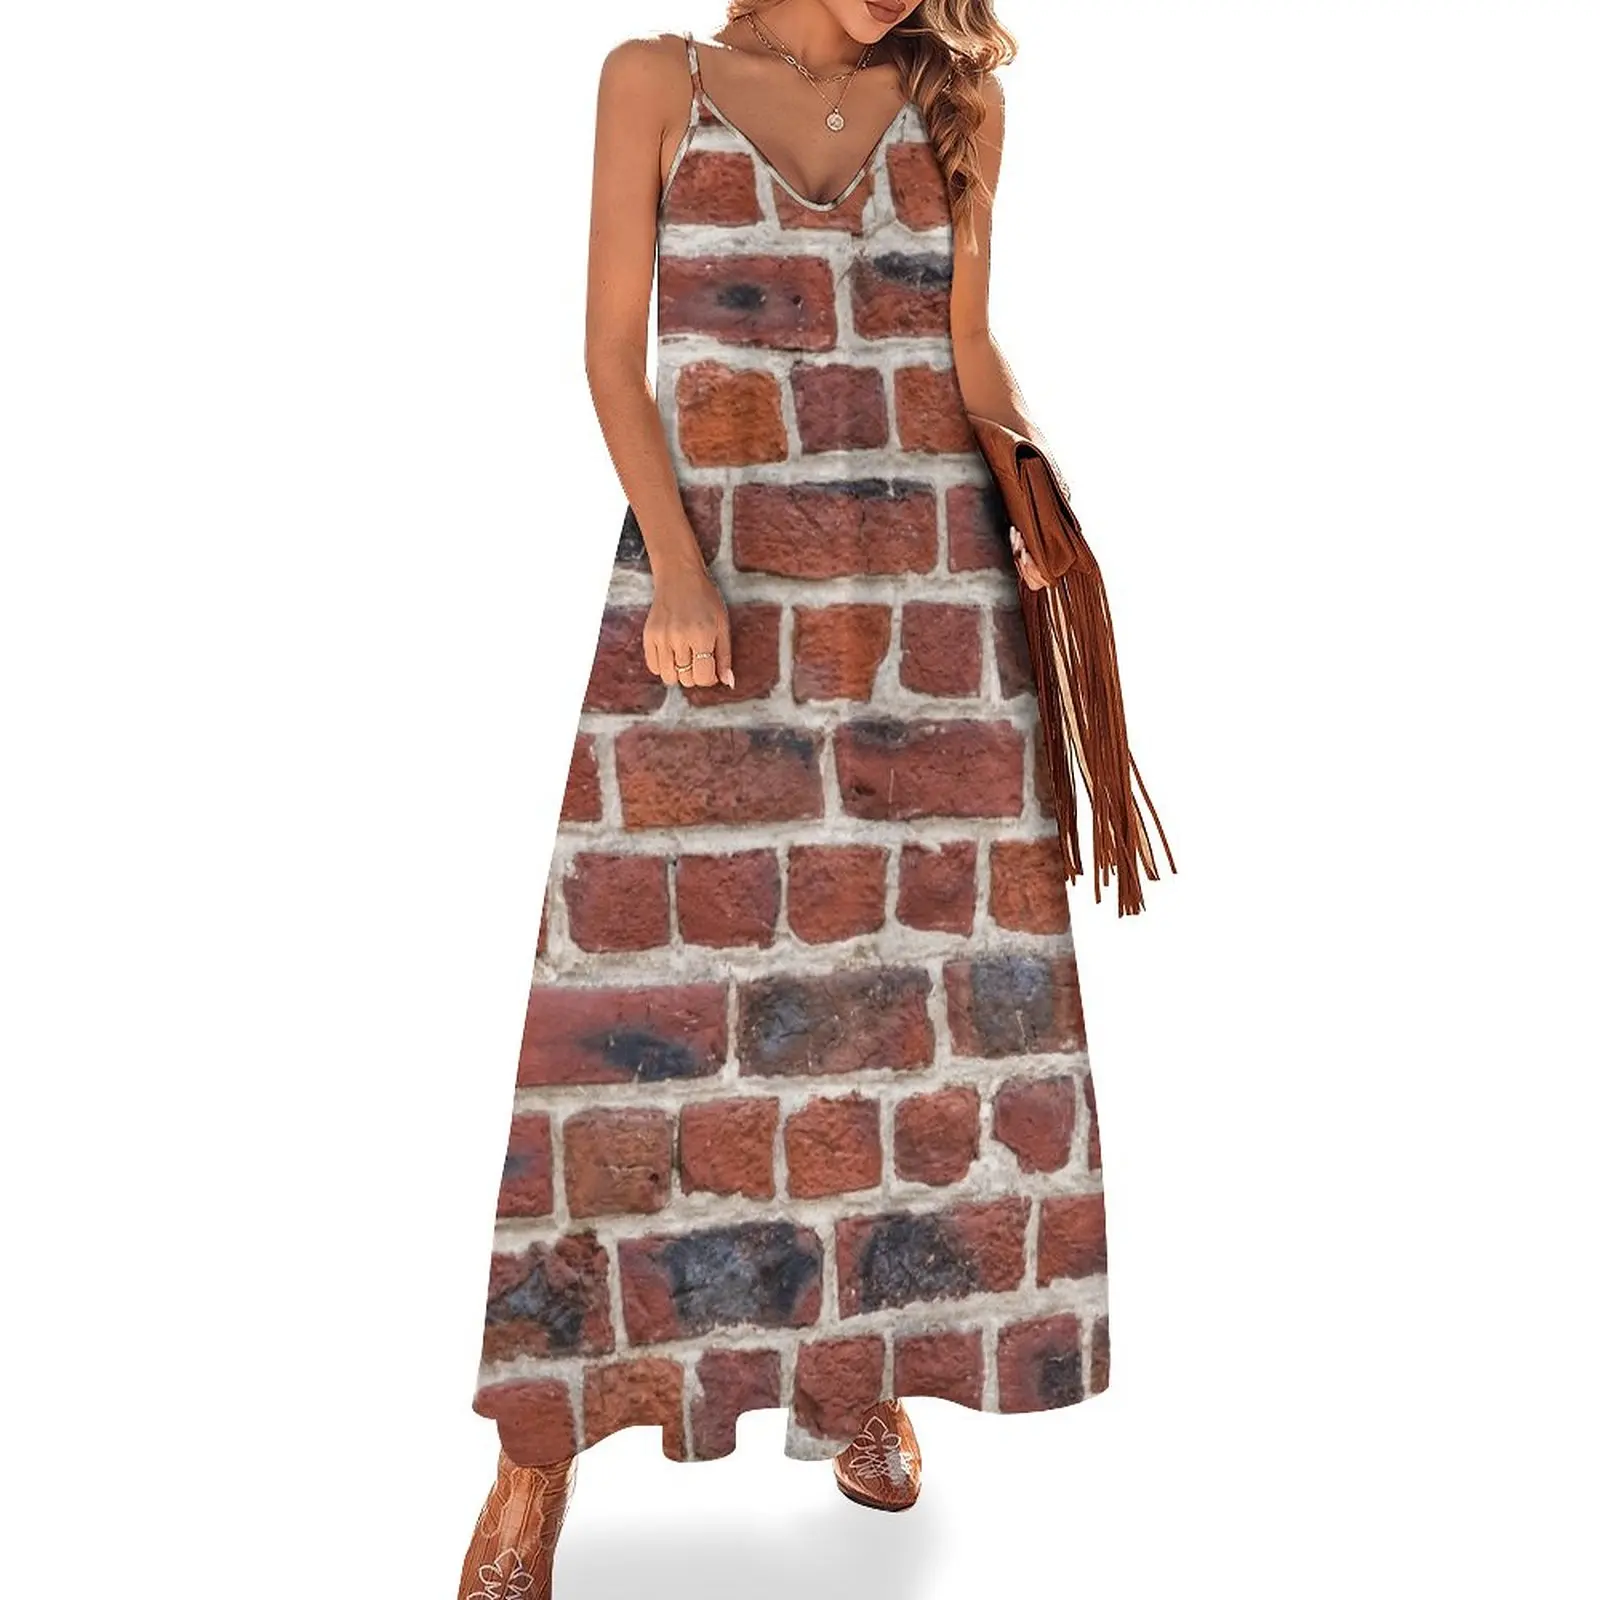 

Red Brick Wall Sleeveless Dress summer dresses elegant women's dresses sale fairy dress